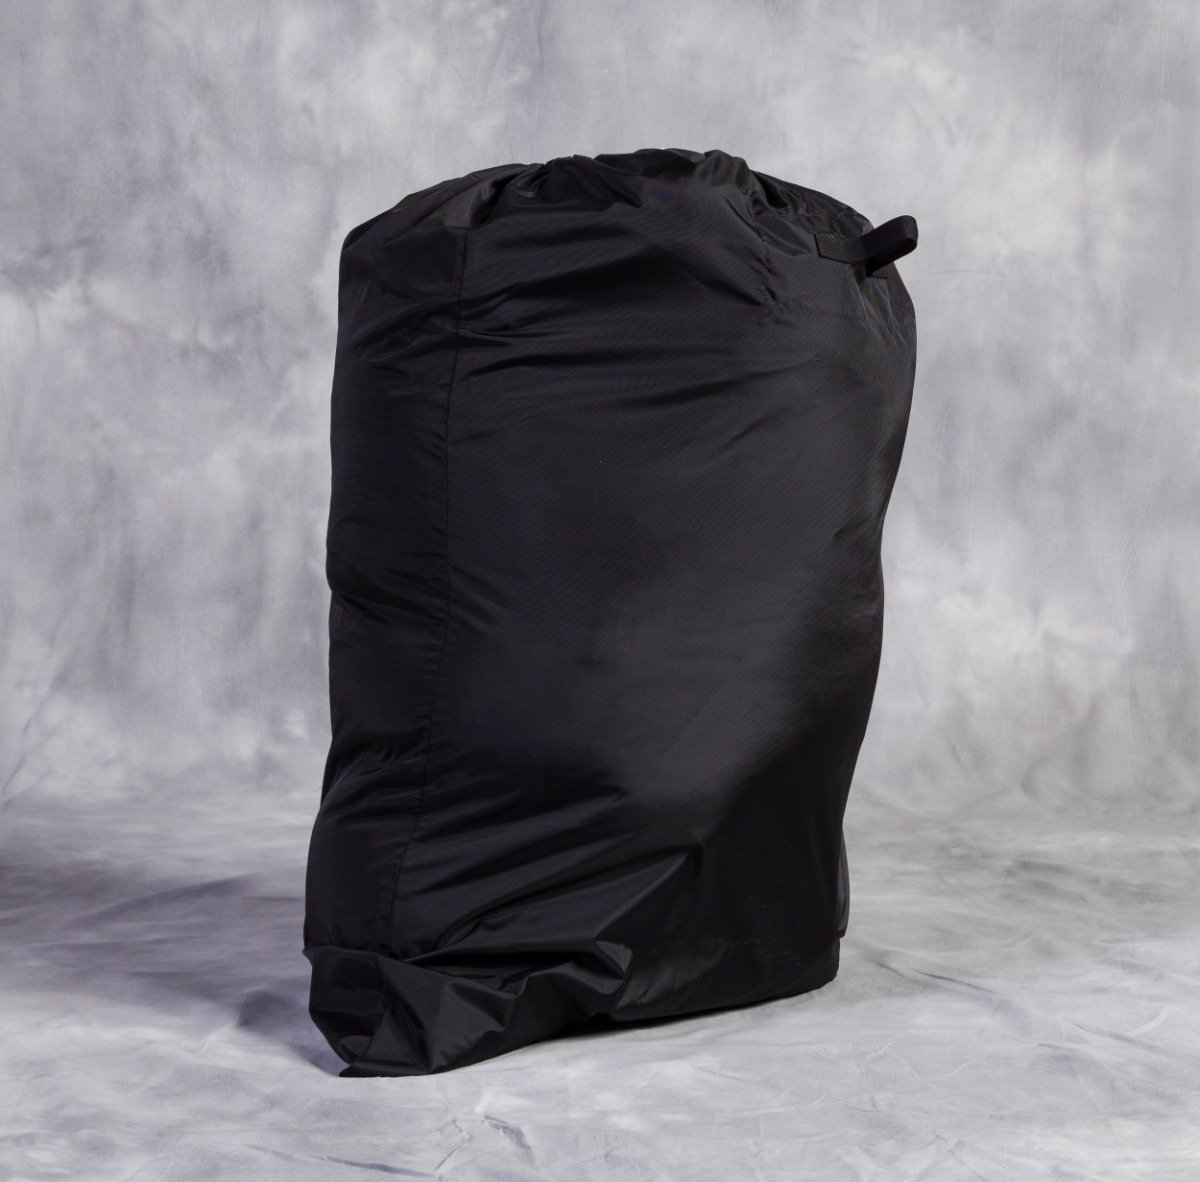 reusable-furniture-covers-utility-bag.jpg